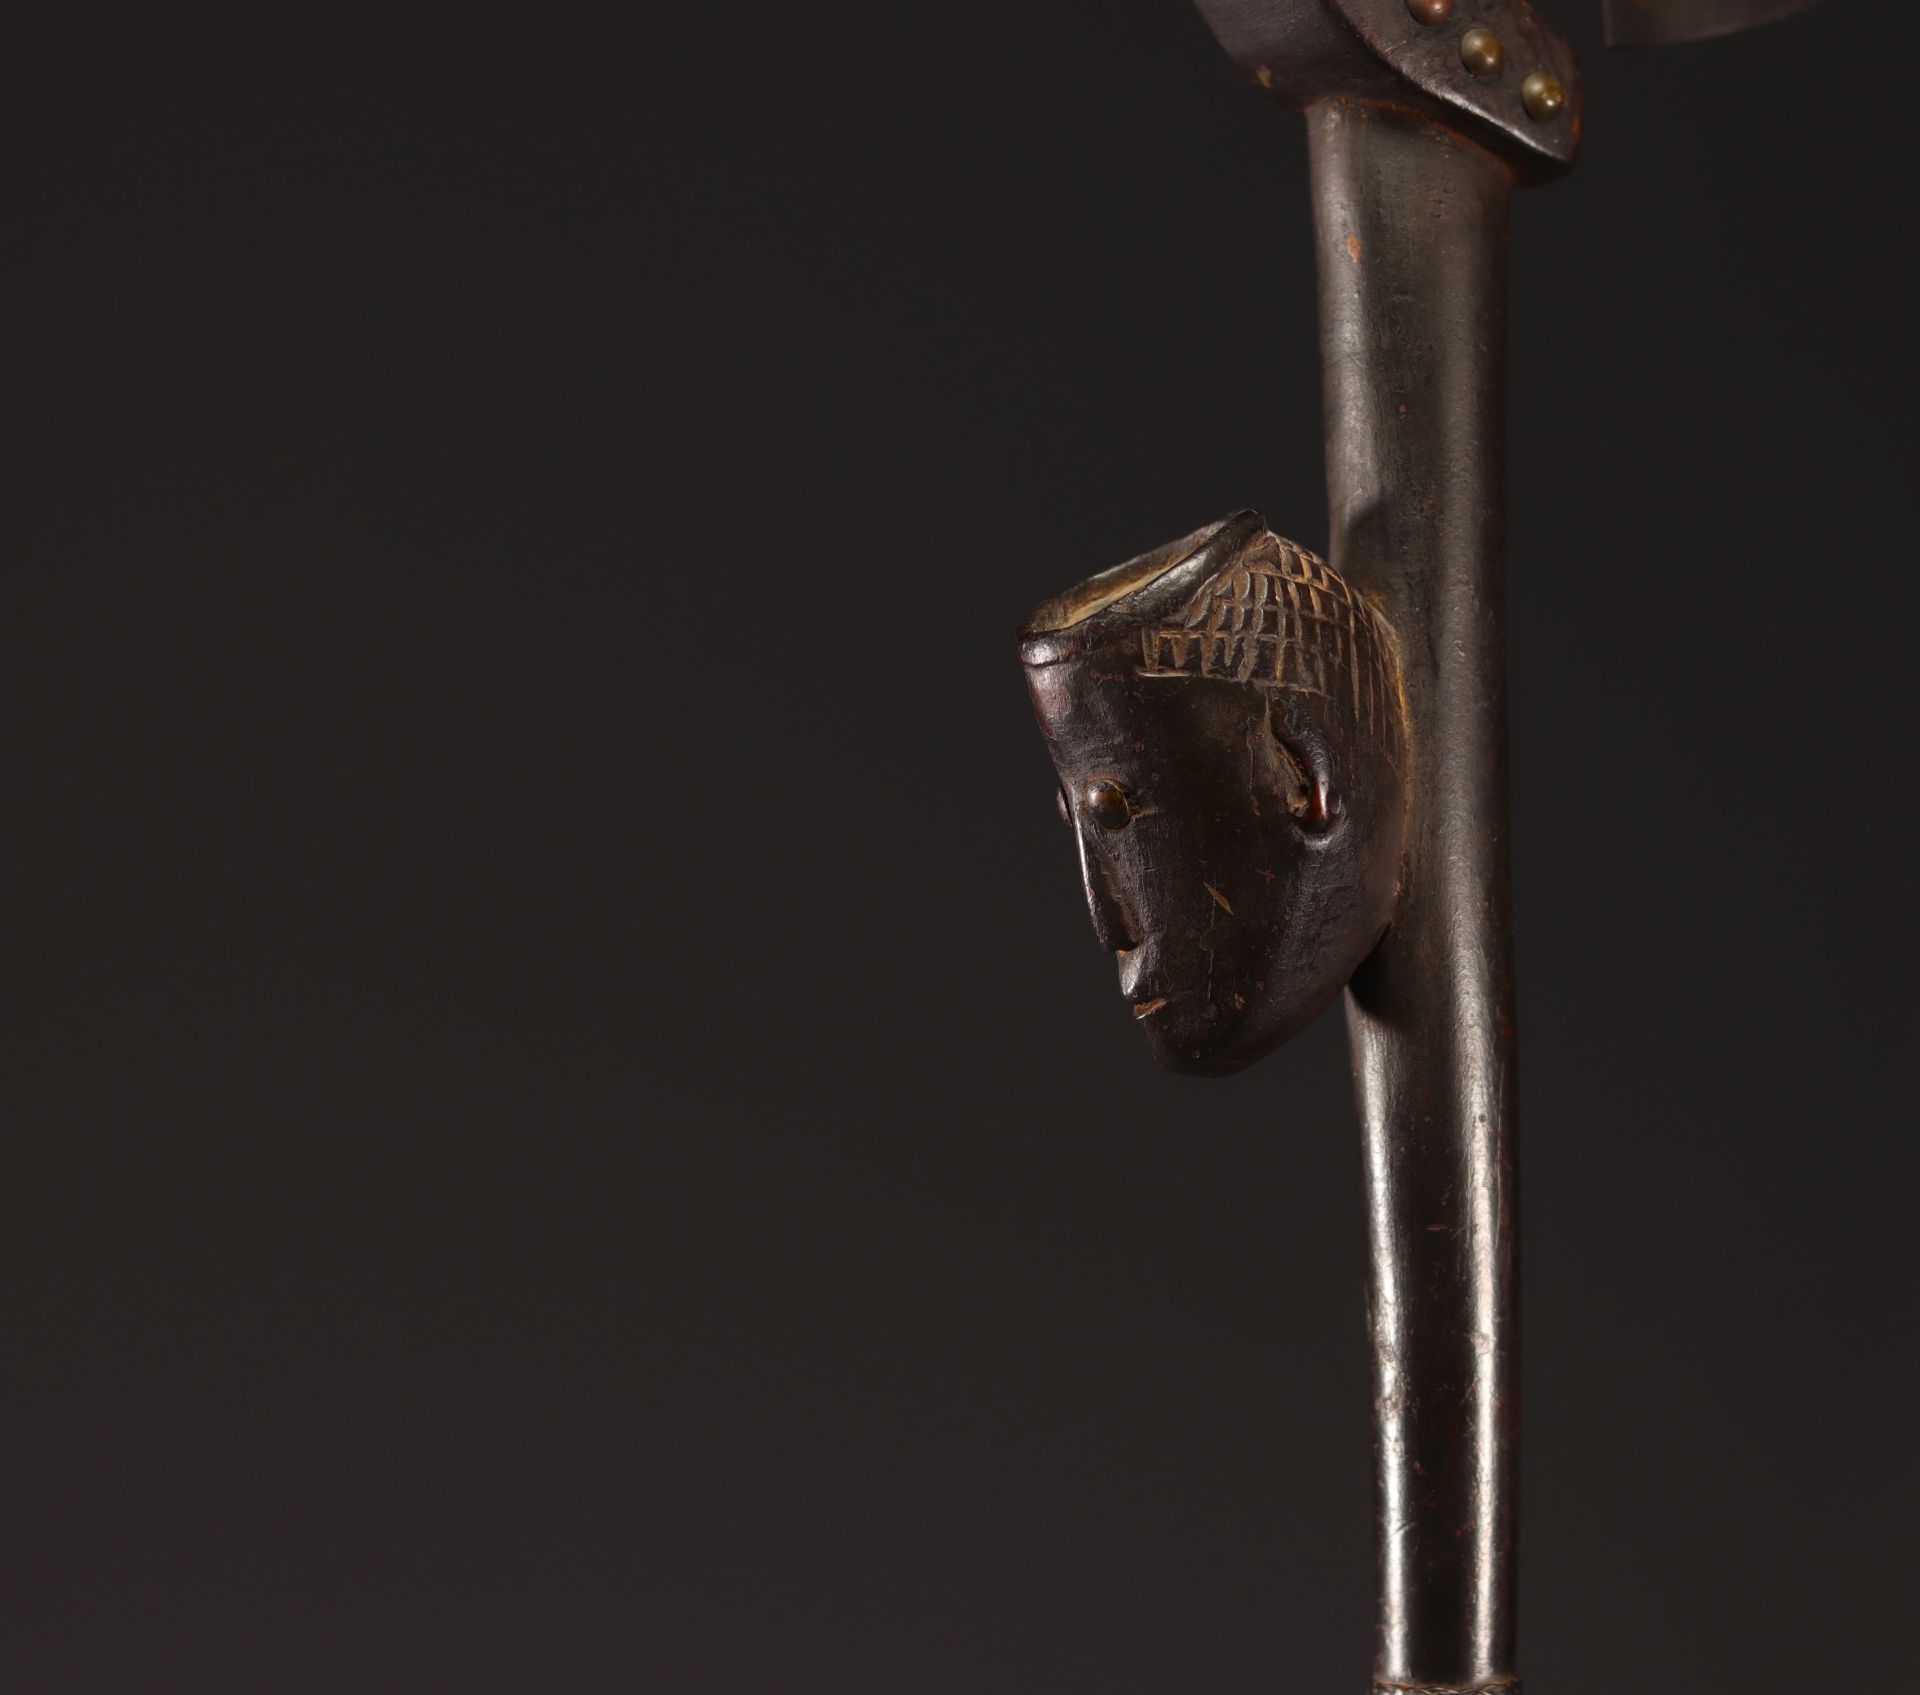 Sceptre - Shona prestige axe - South Africa - Image 3 of 4